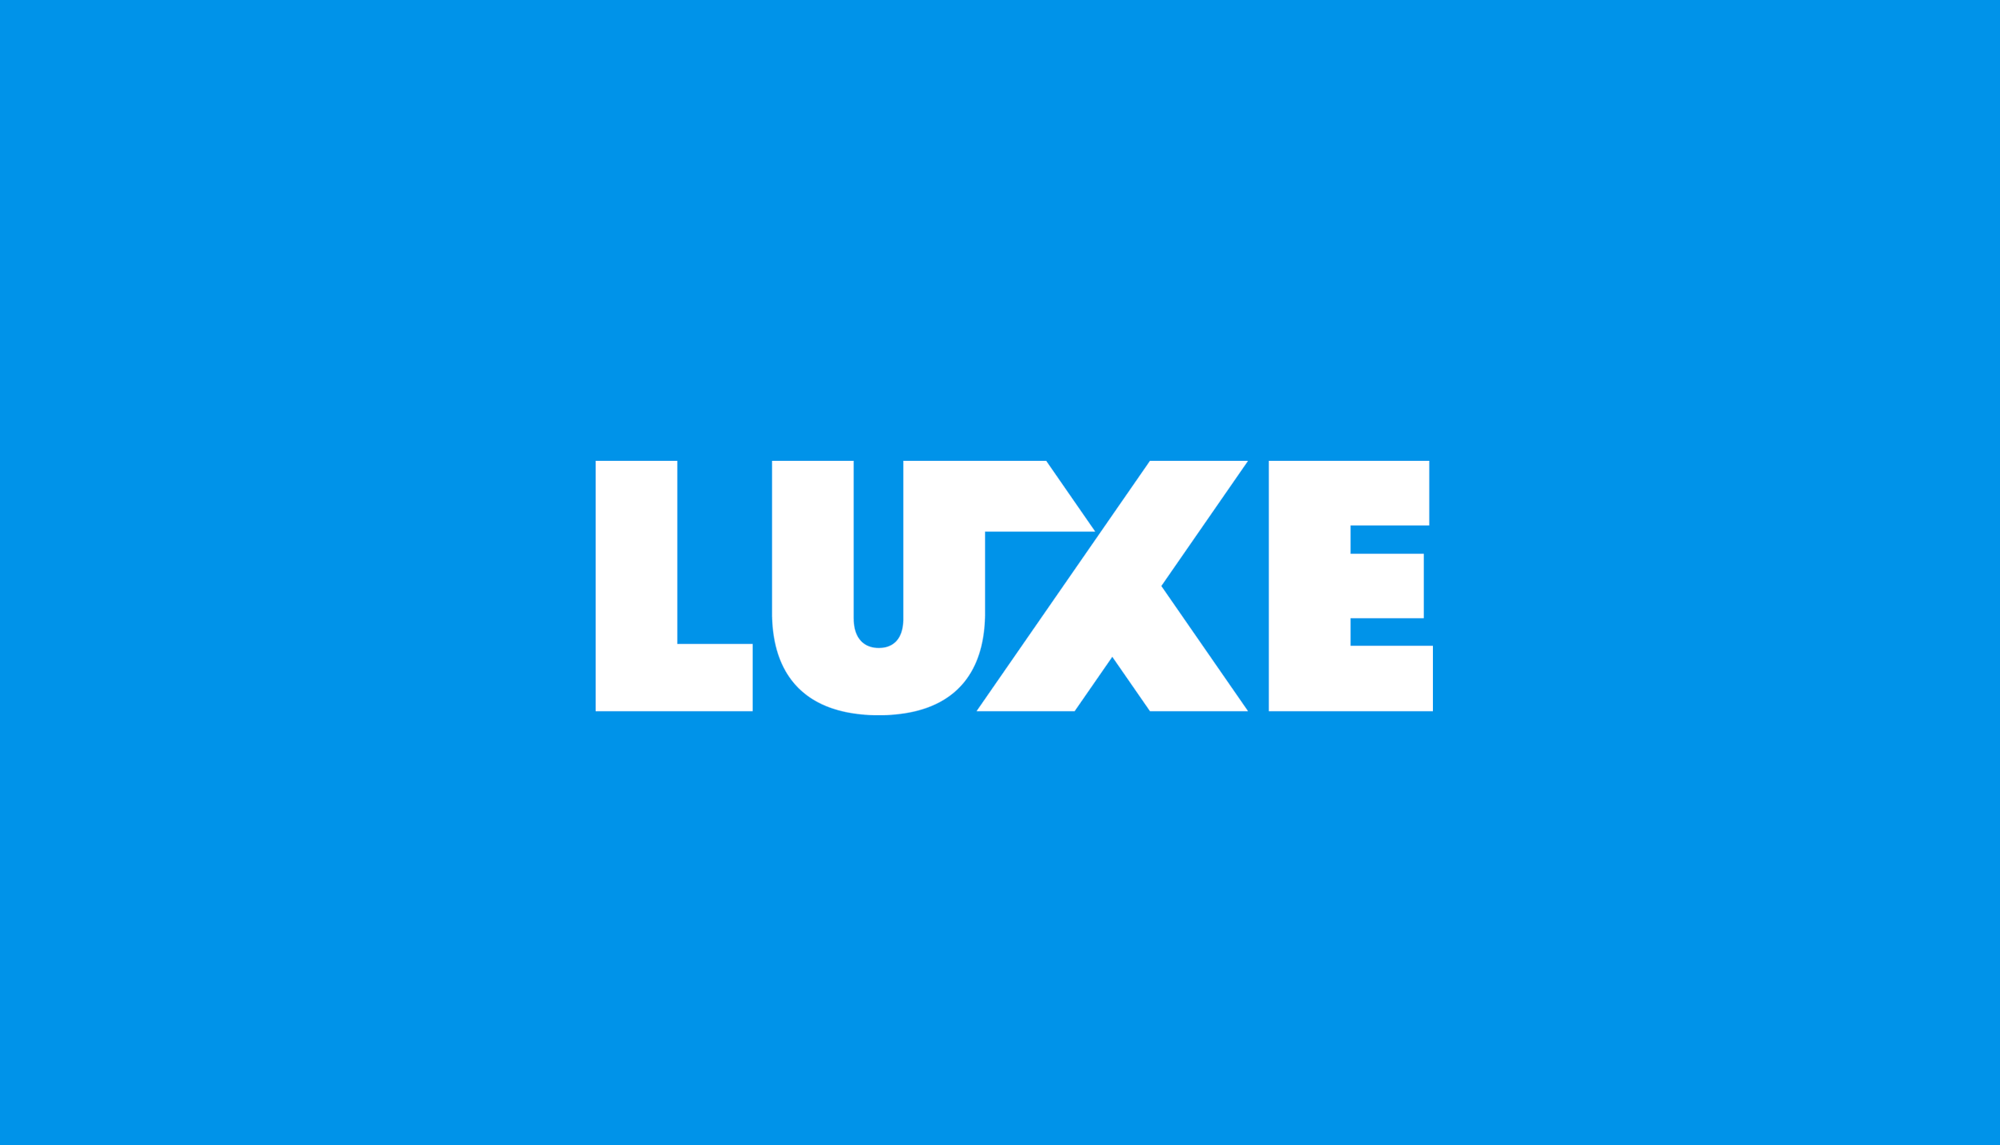 Four Letter Company Logo - Luxe - Mackey Saturday